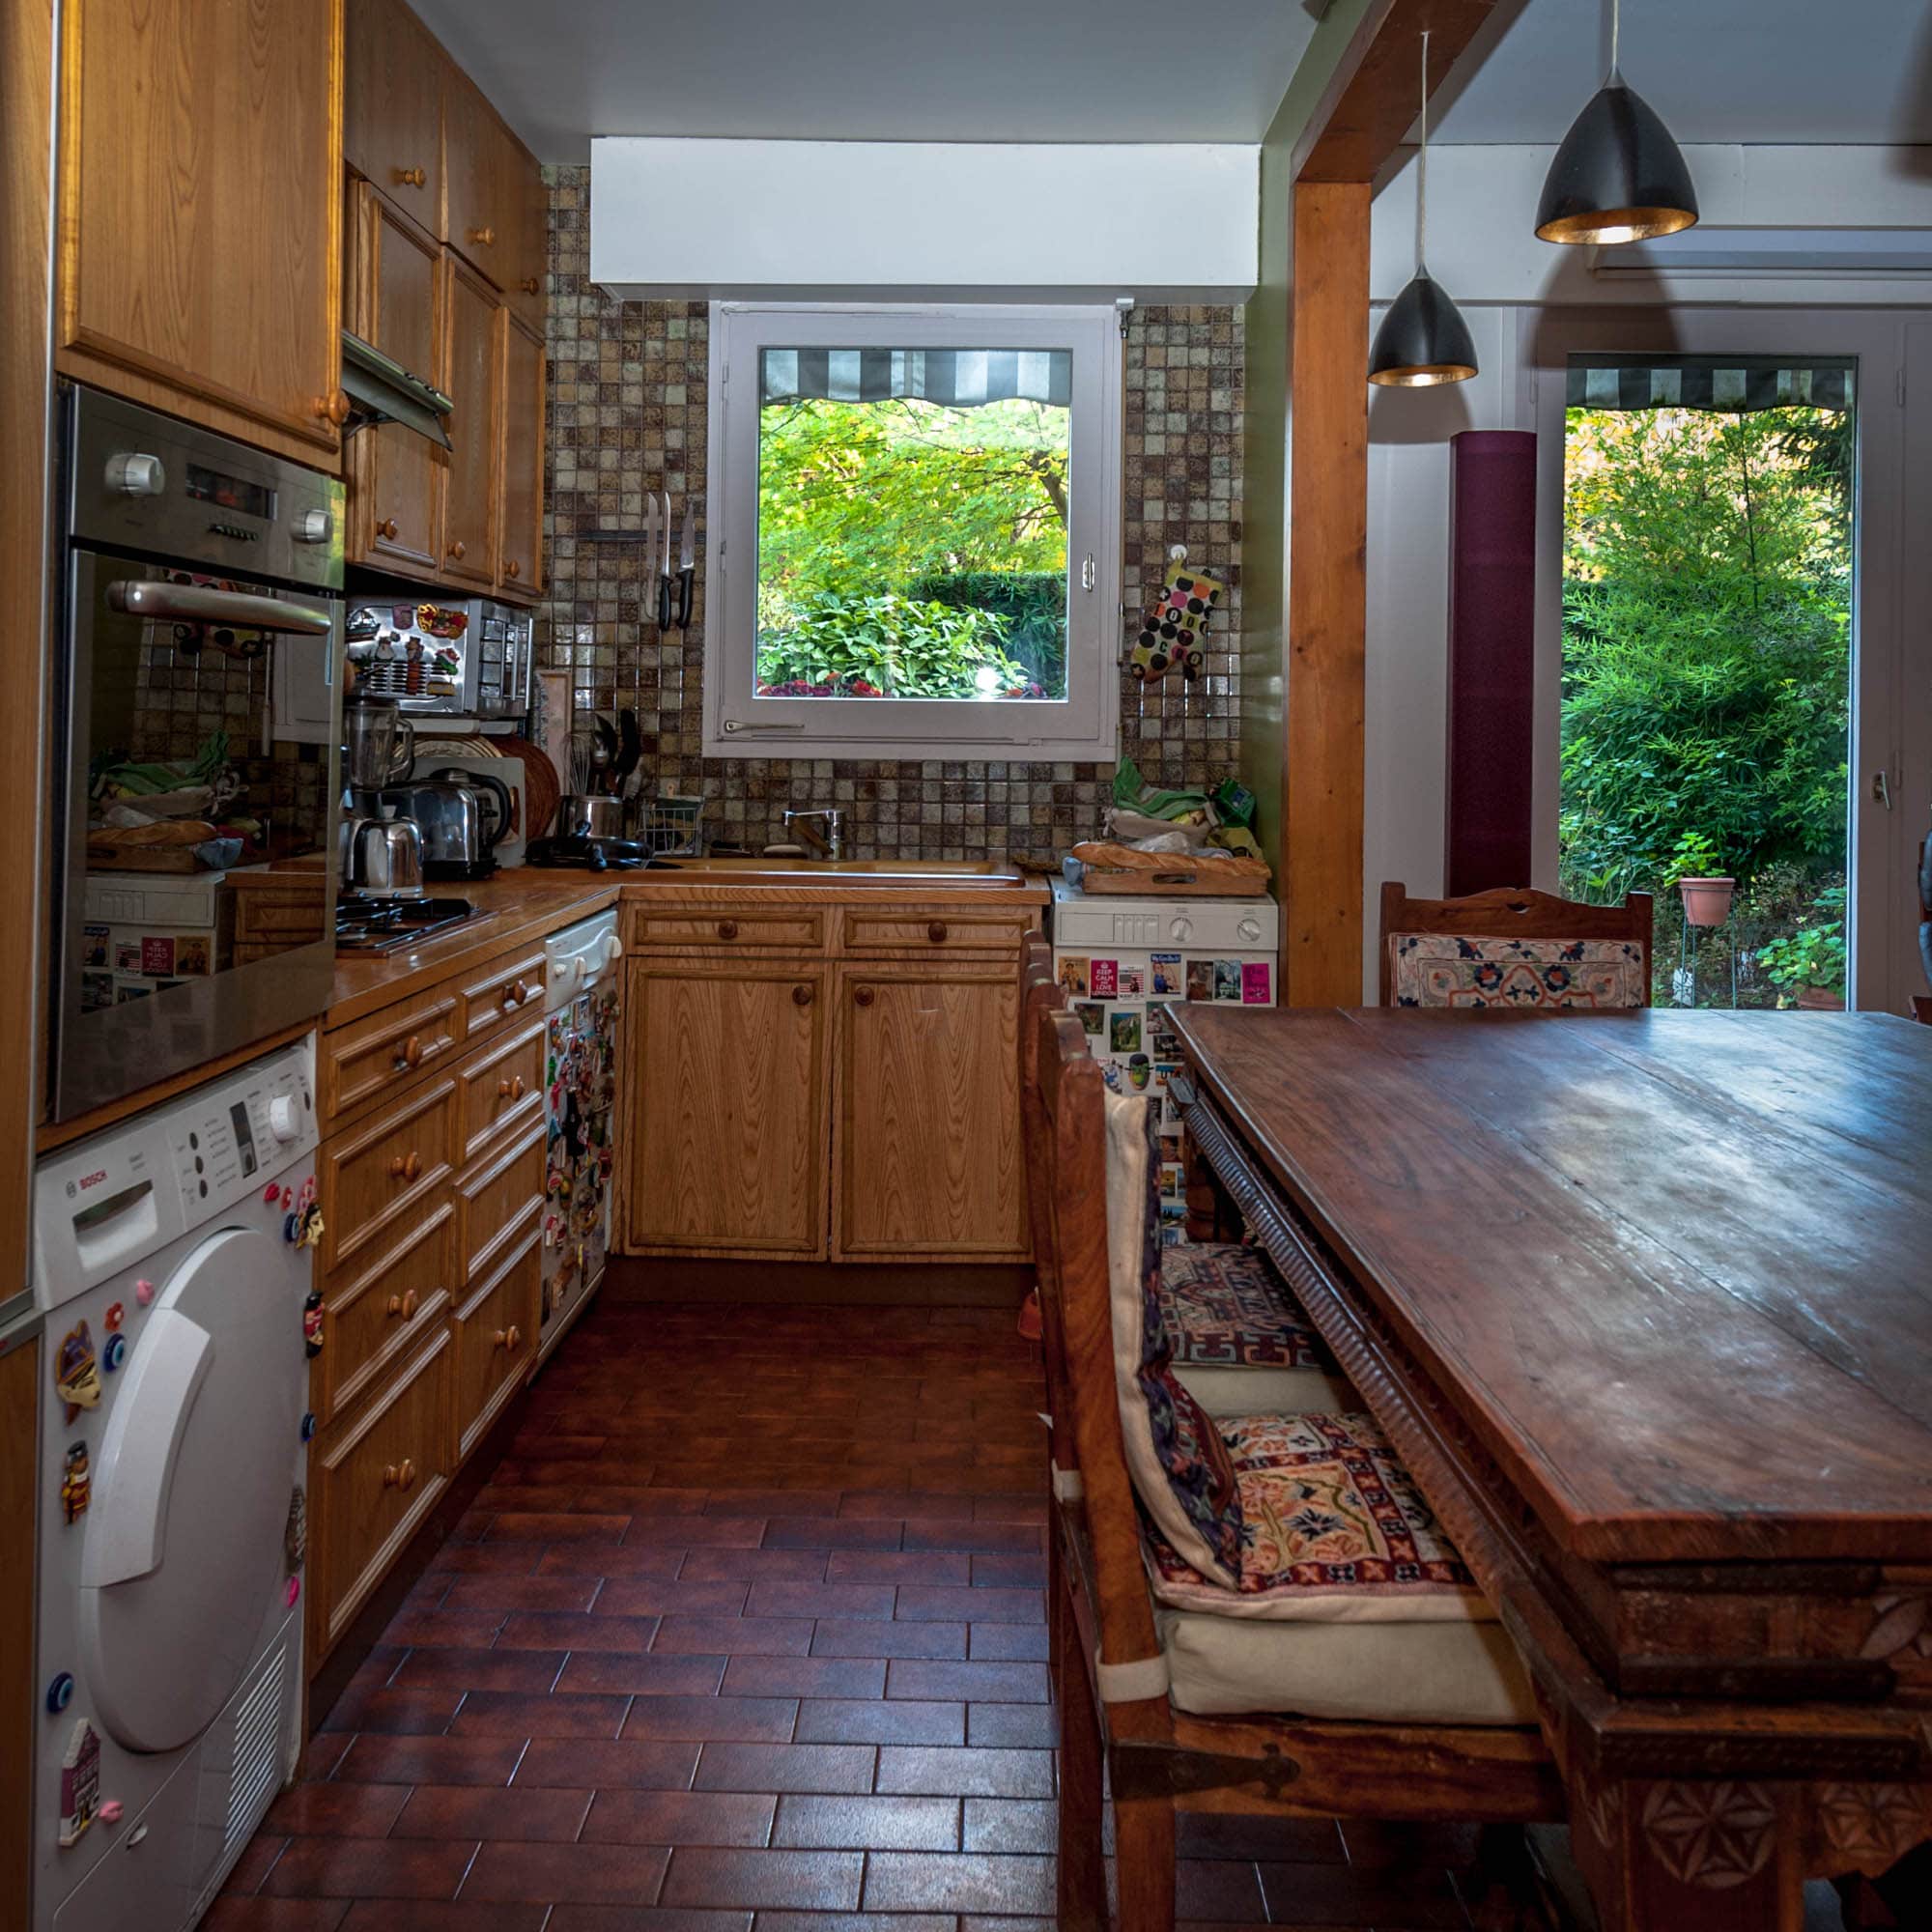 Accomodation to frédéric leloup home, the kitchen